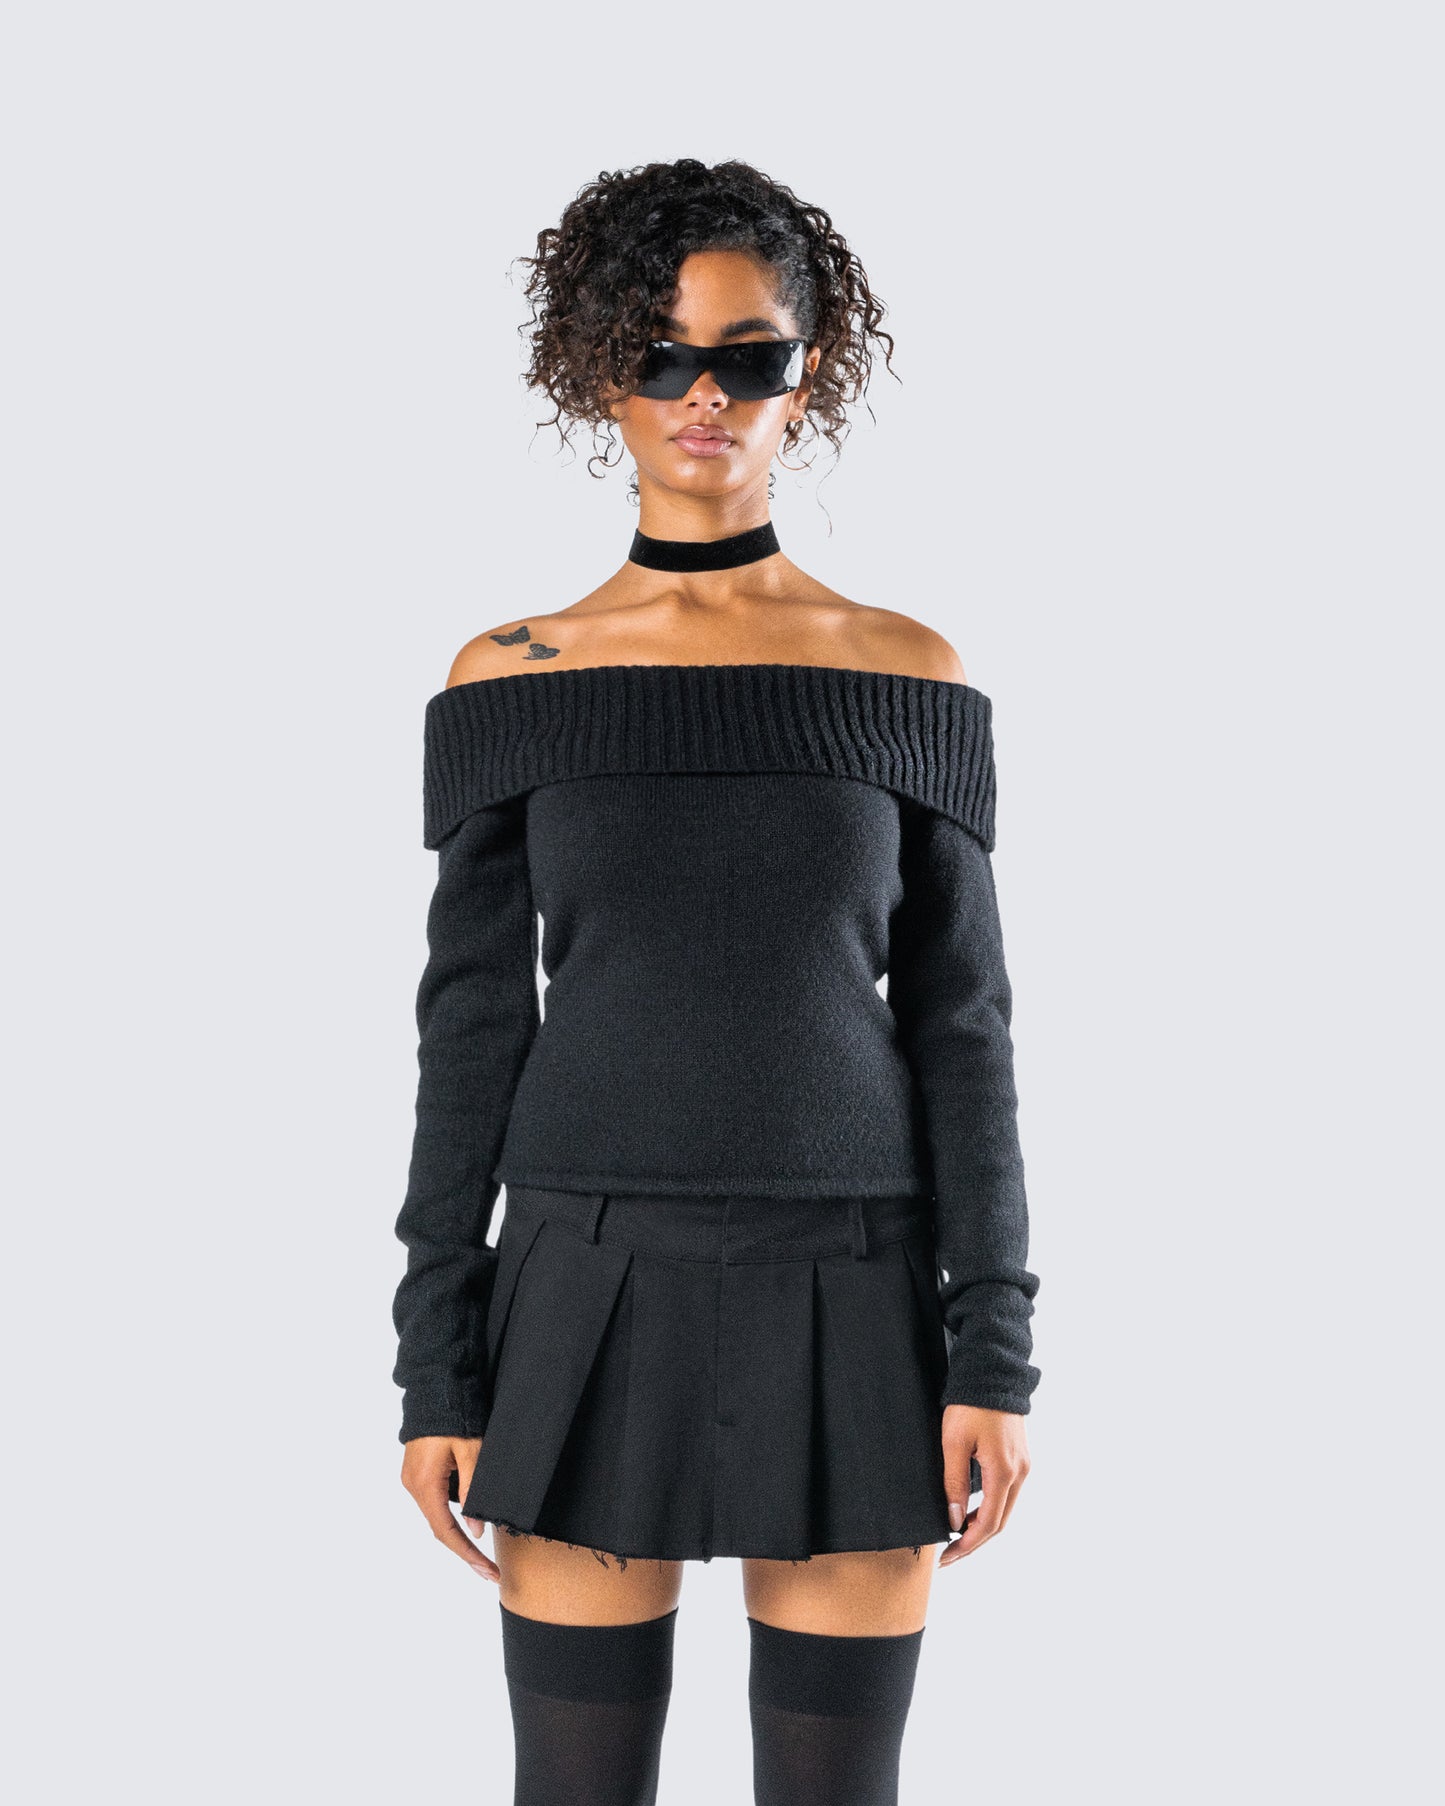 Lorraine Black Sweater Knit Top